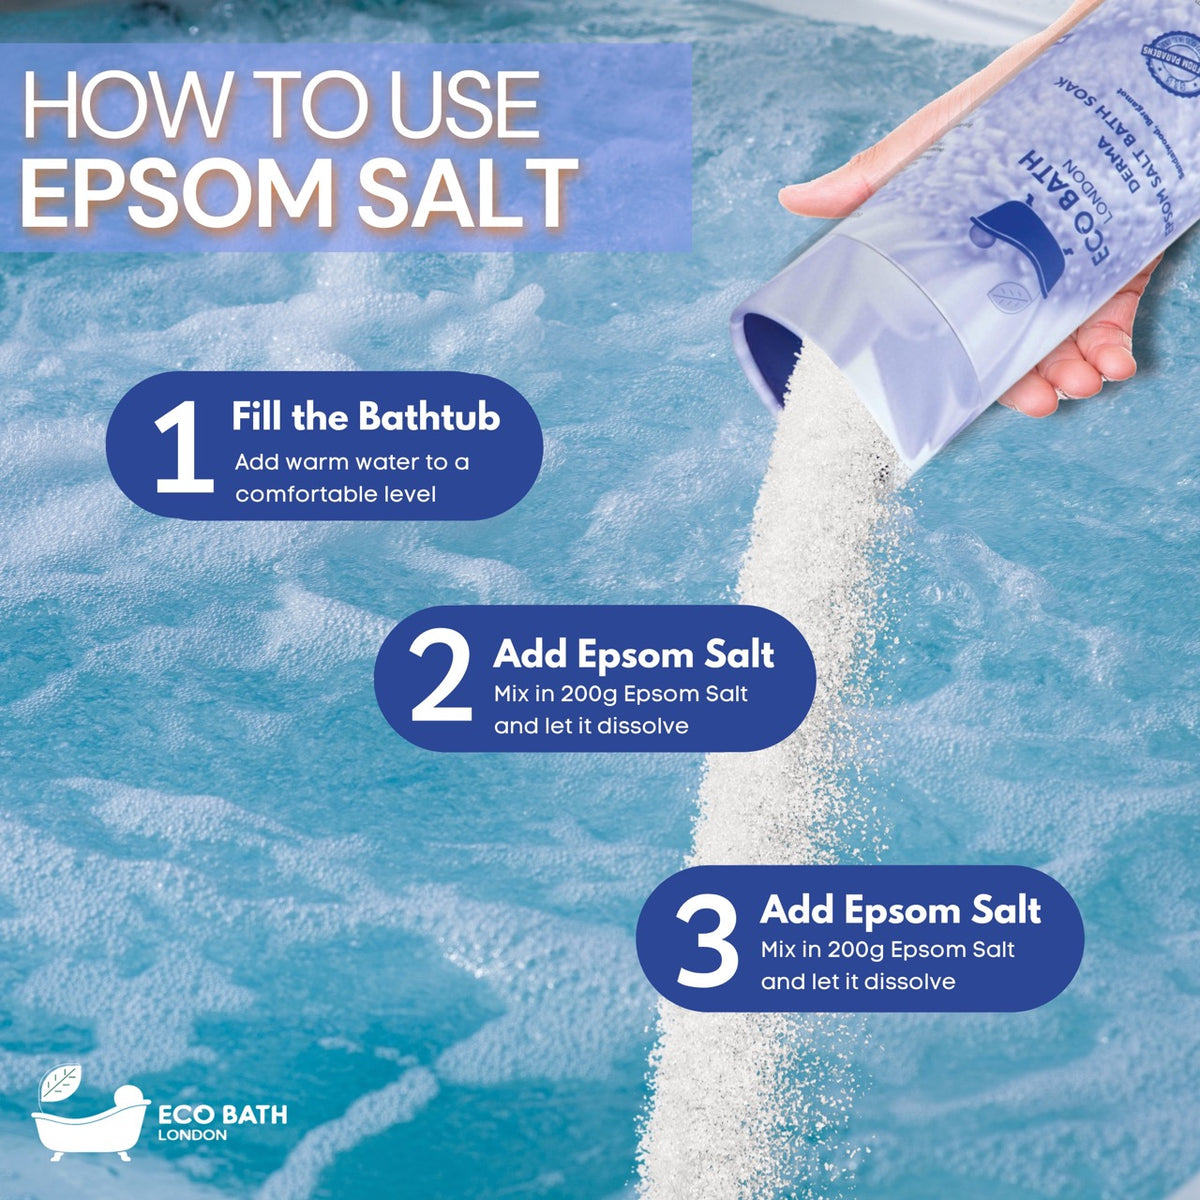 Eco Bath Derma Epsom Salt Bath Soak - Tube